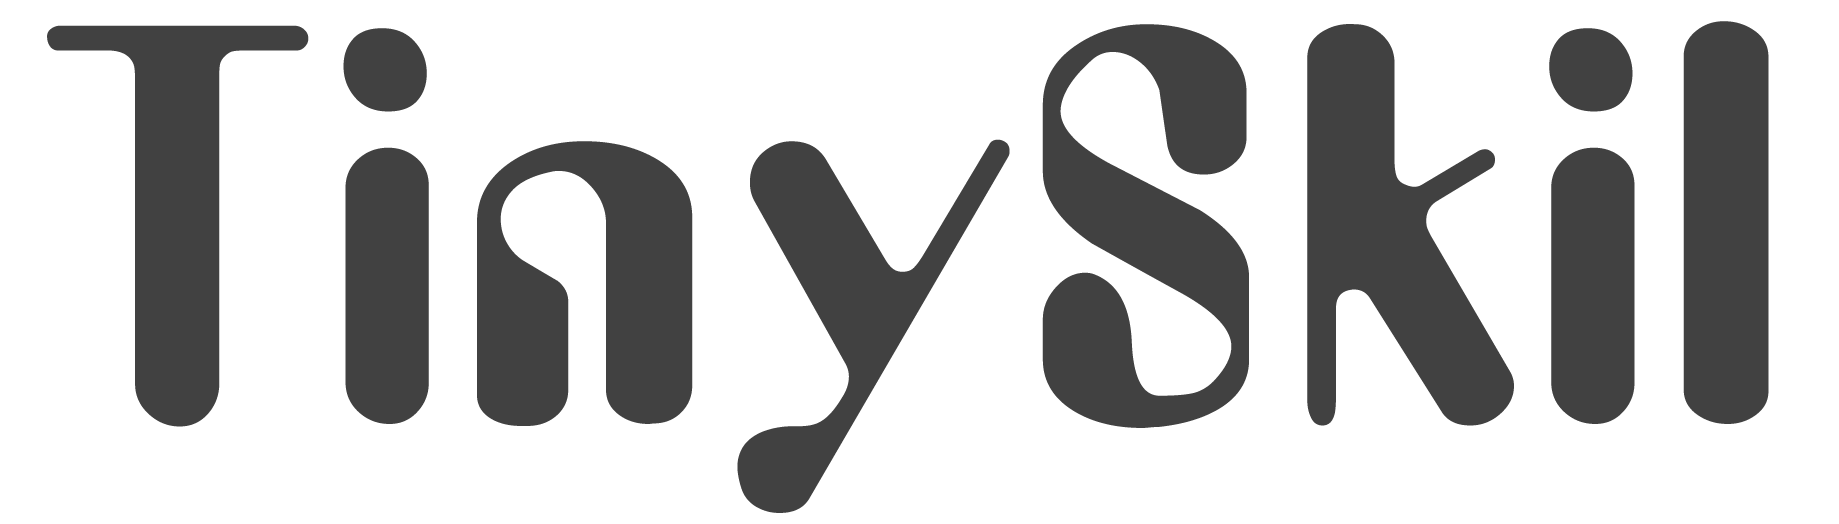 TinySkil Logo